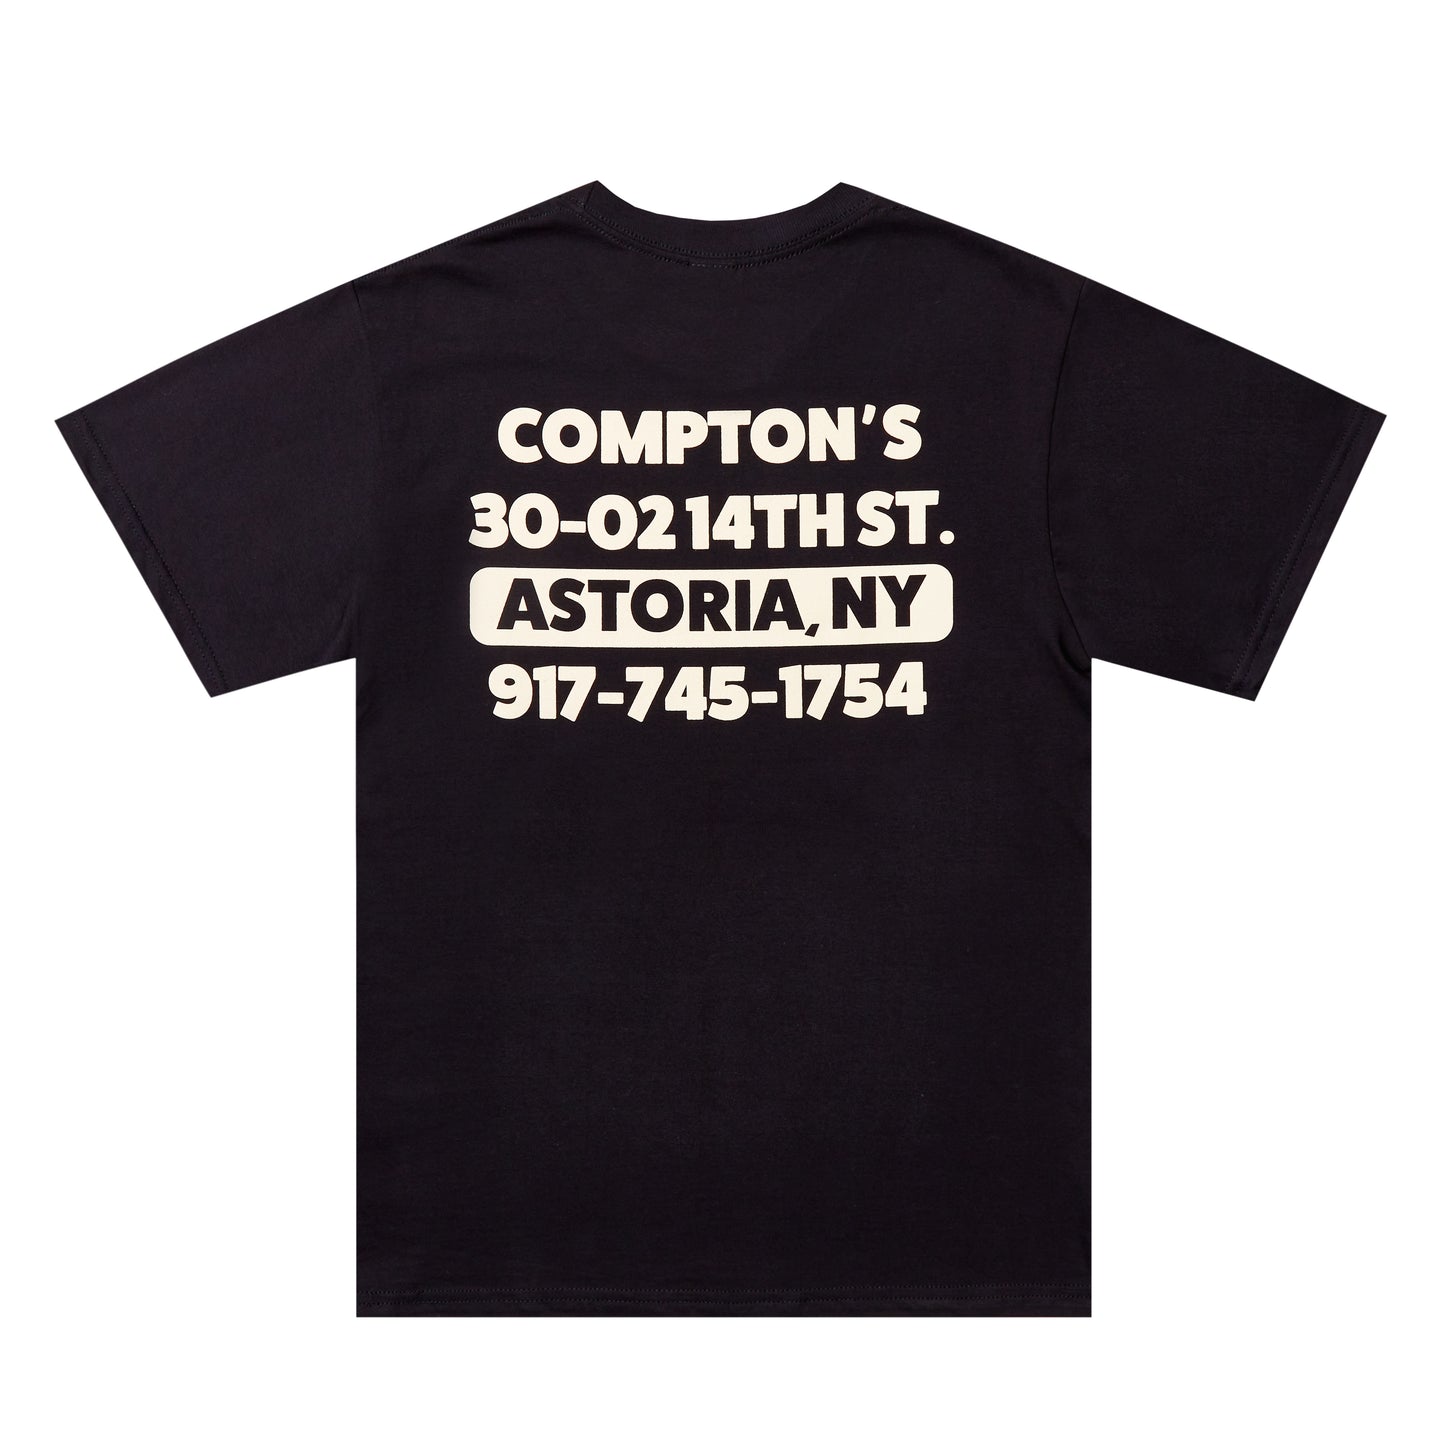 Compton's C1 Tee